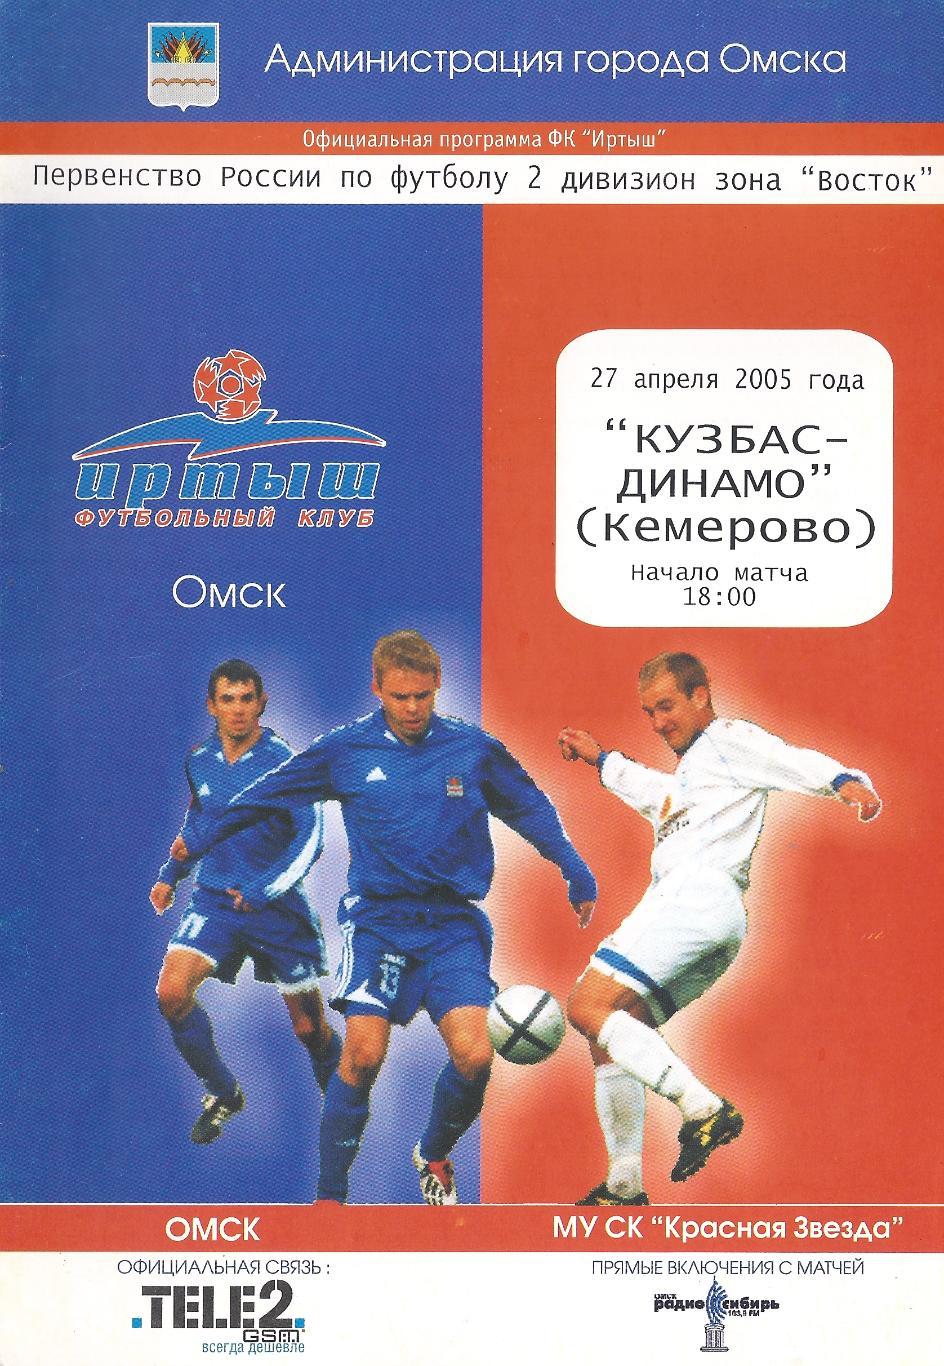 2005 - Иртыш Омск - Кузбасс-Динамо Кемерово - 27.04